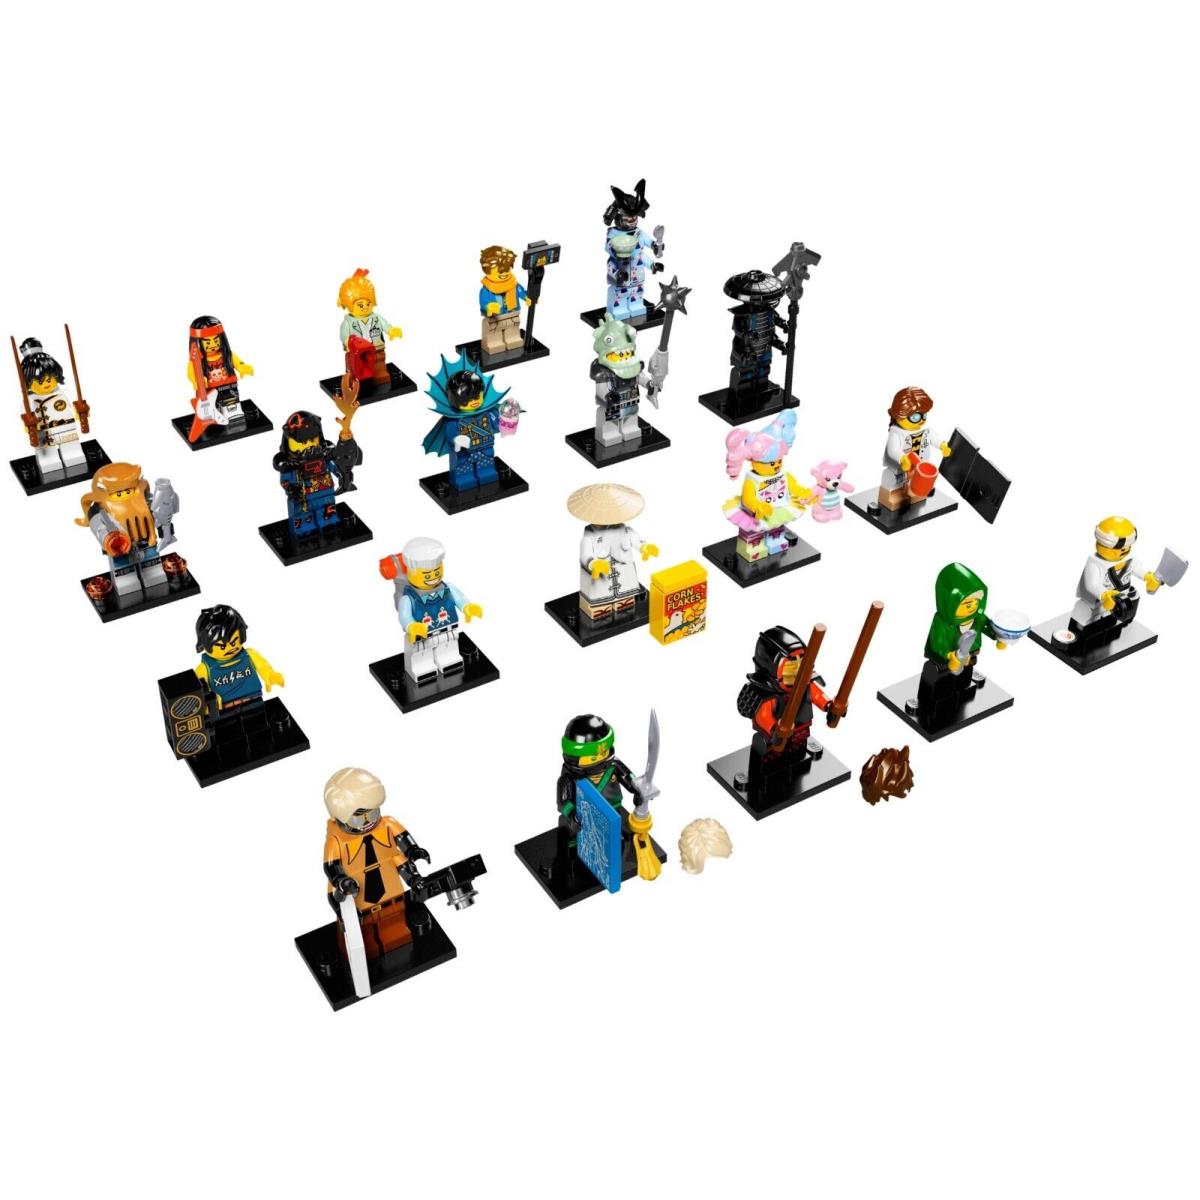 Lego 71019 The Ninjago Movie Collectible Minifigures Complete 20 Set Cmf